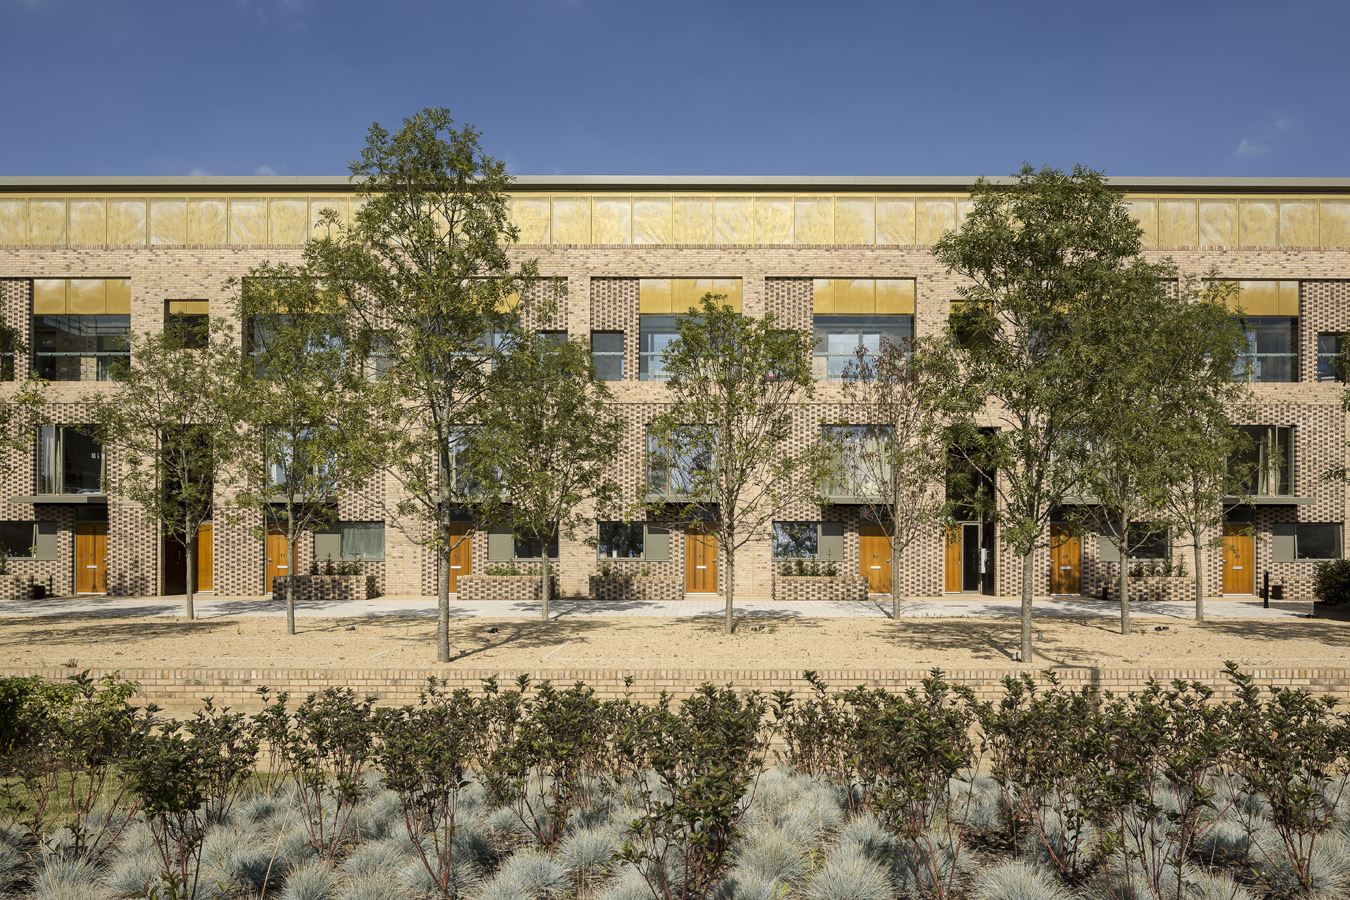 Abode named best new neighbourhood at Cambridge Design and Construction Awards